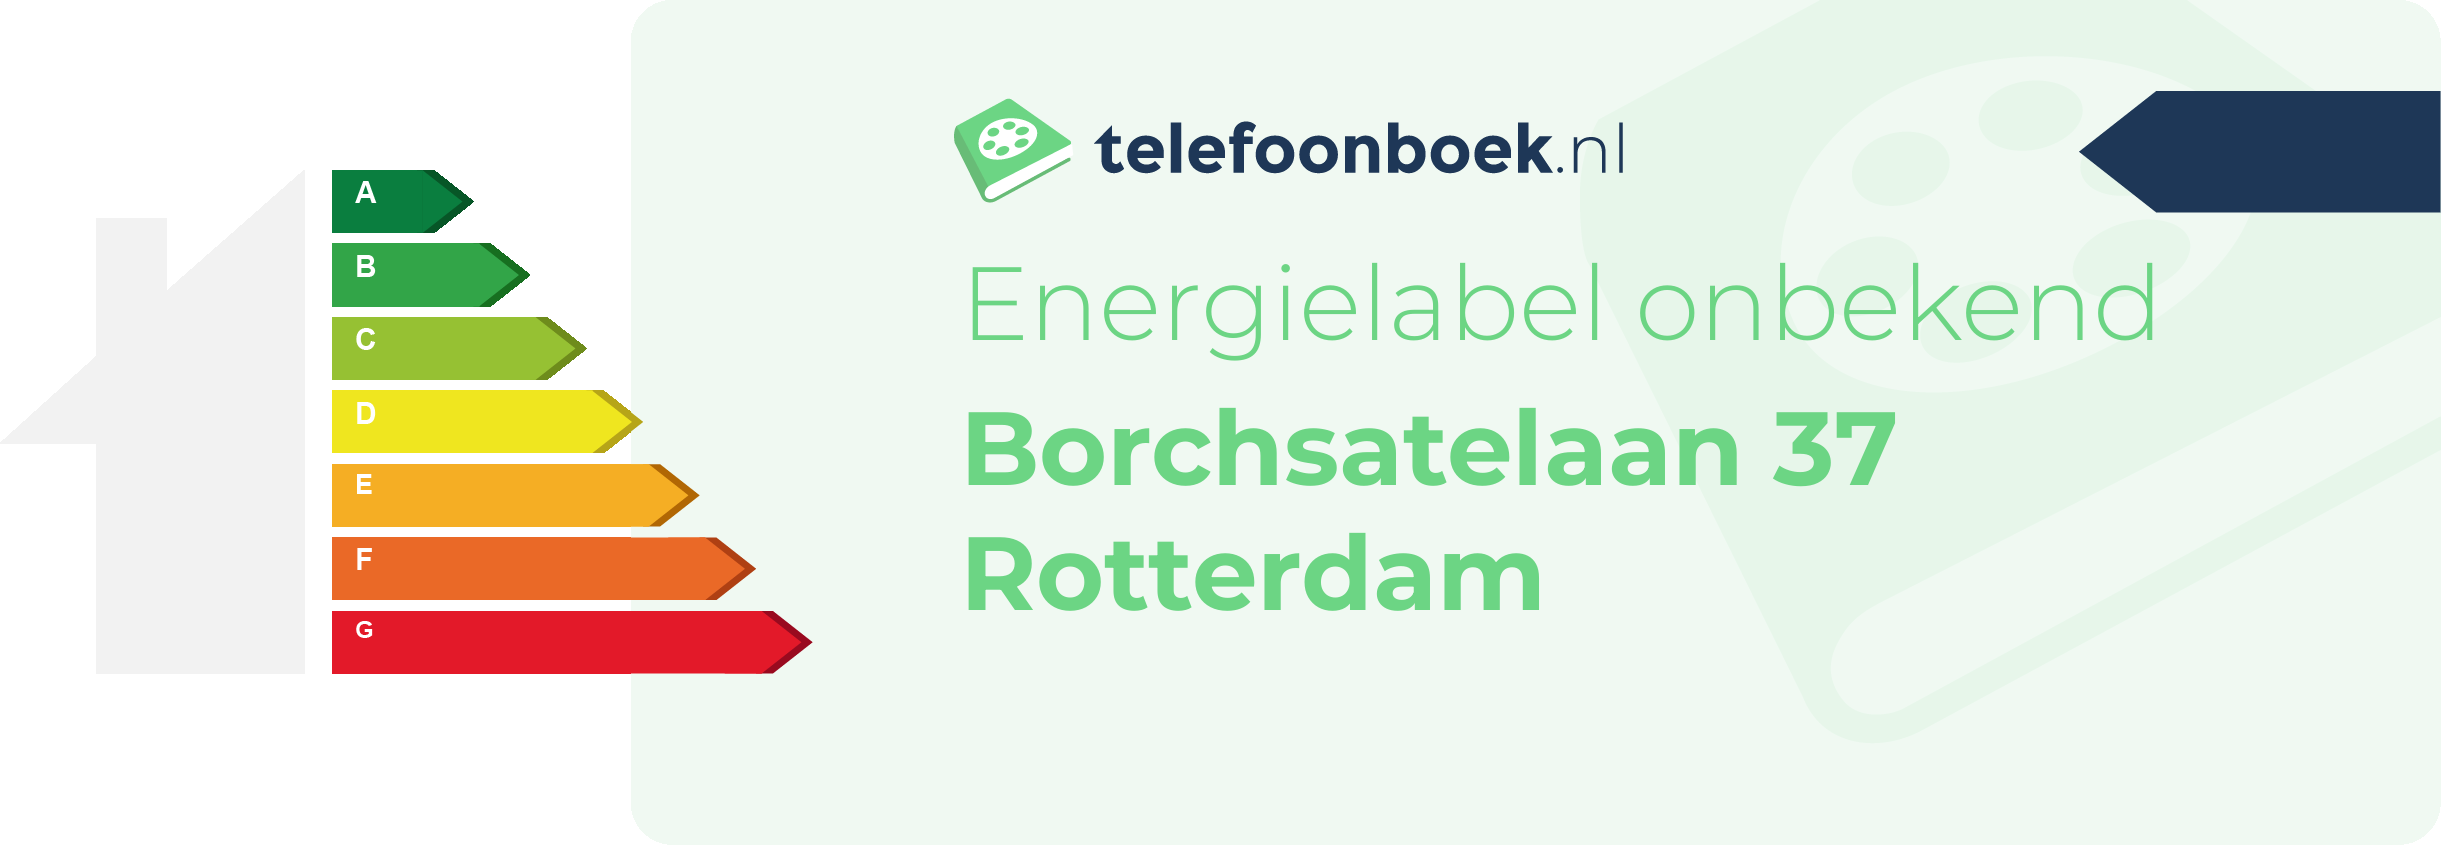 Energielabel Borchsatelaan 37 Rotterdam